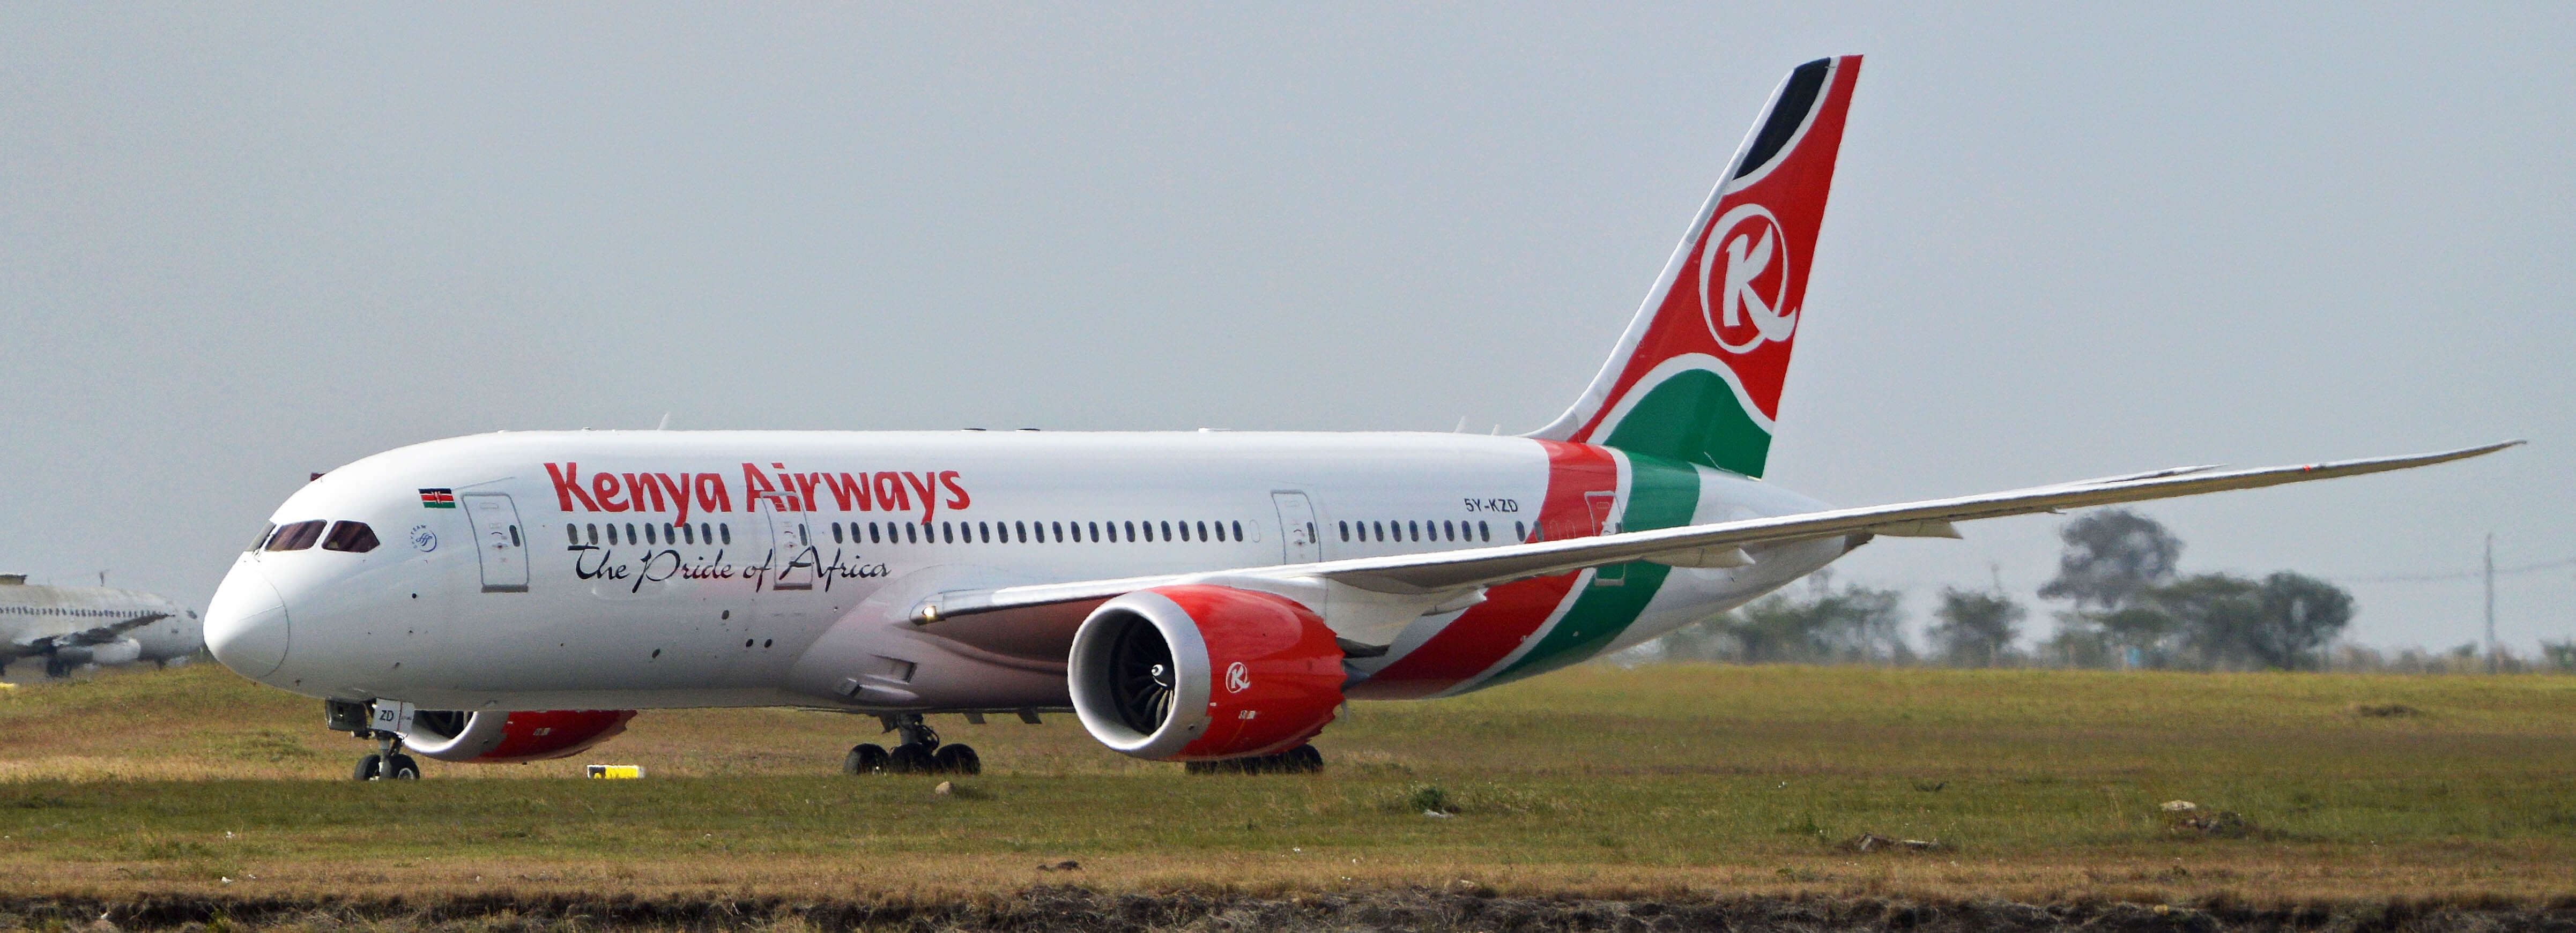 Kenya Airways plane | Wikimedia